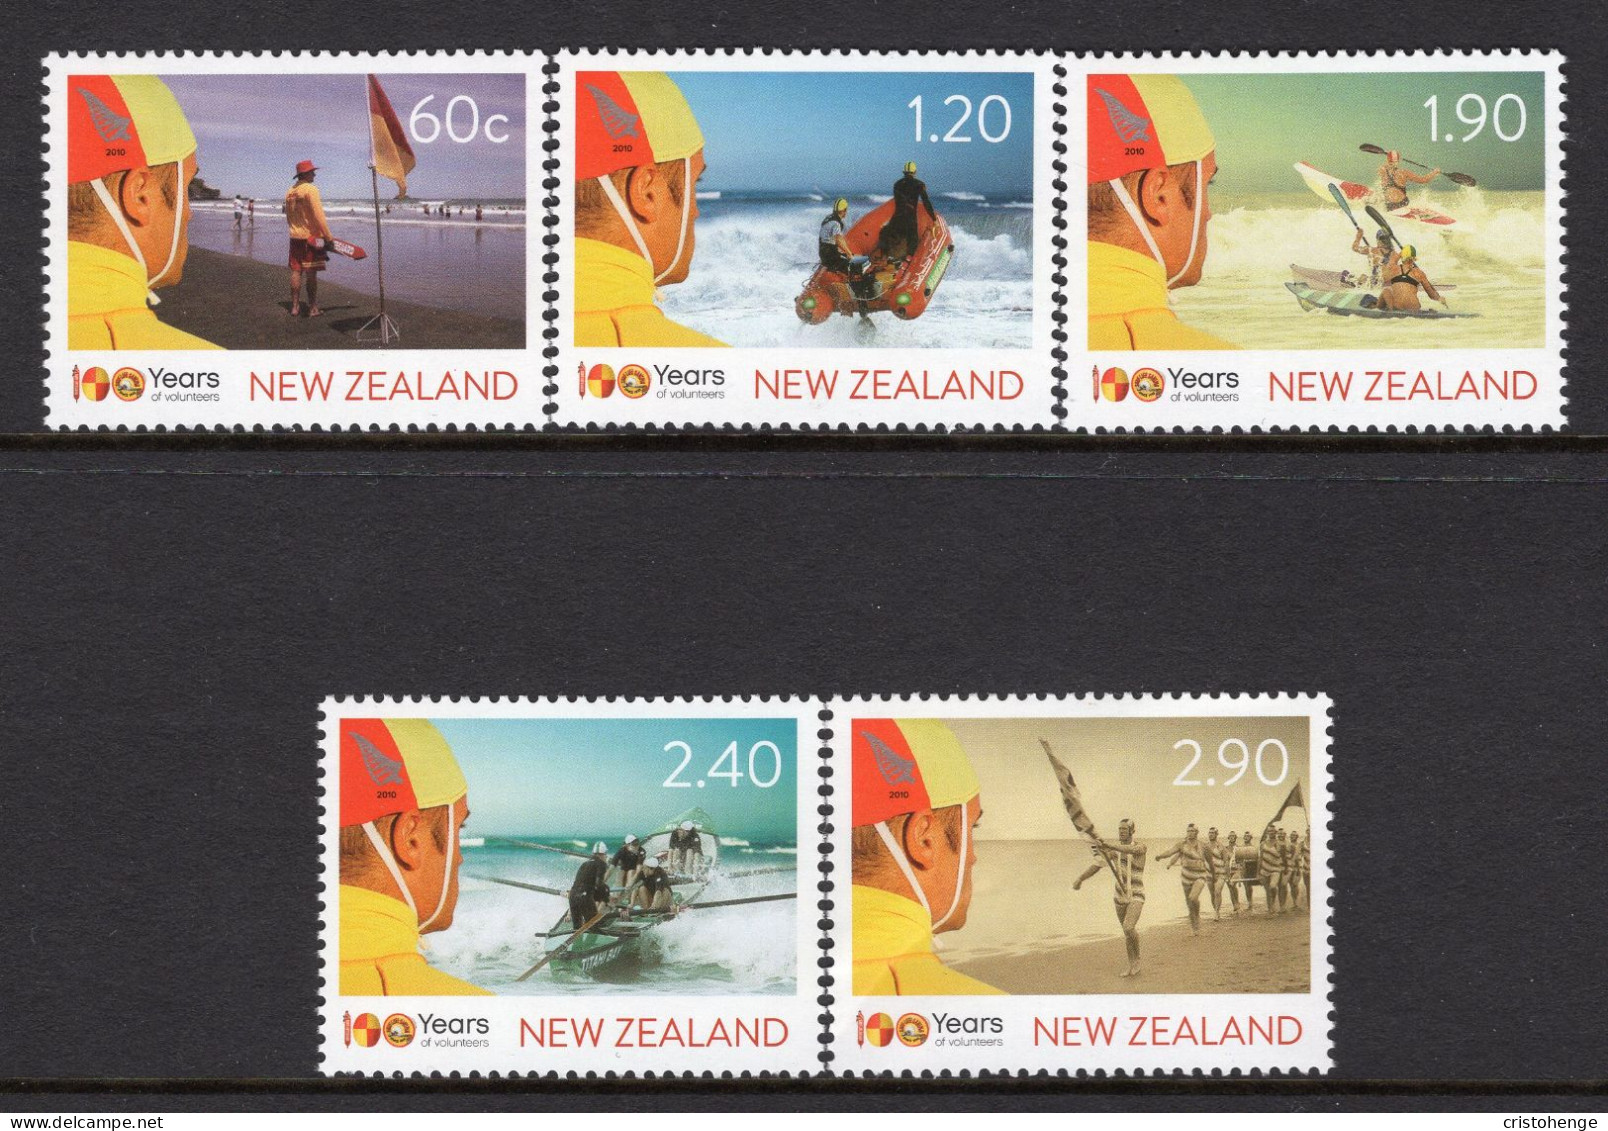 New Zealand 2010 Centenary Of Surf Lifesaving Set MNH (SG 3247-3251) - Unused Stamps